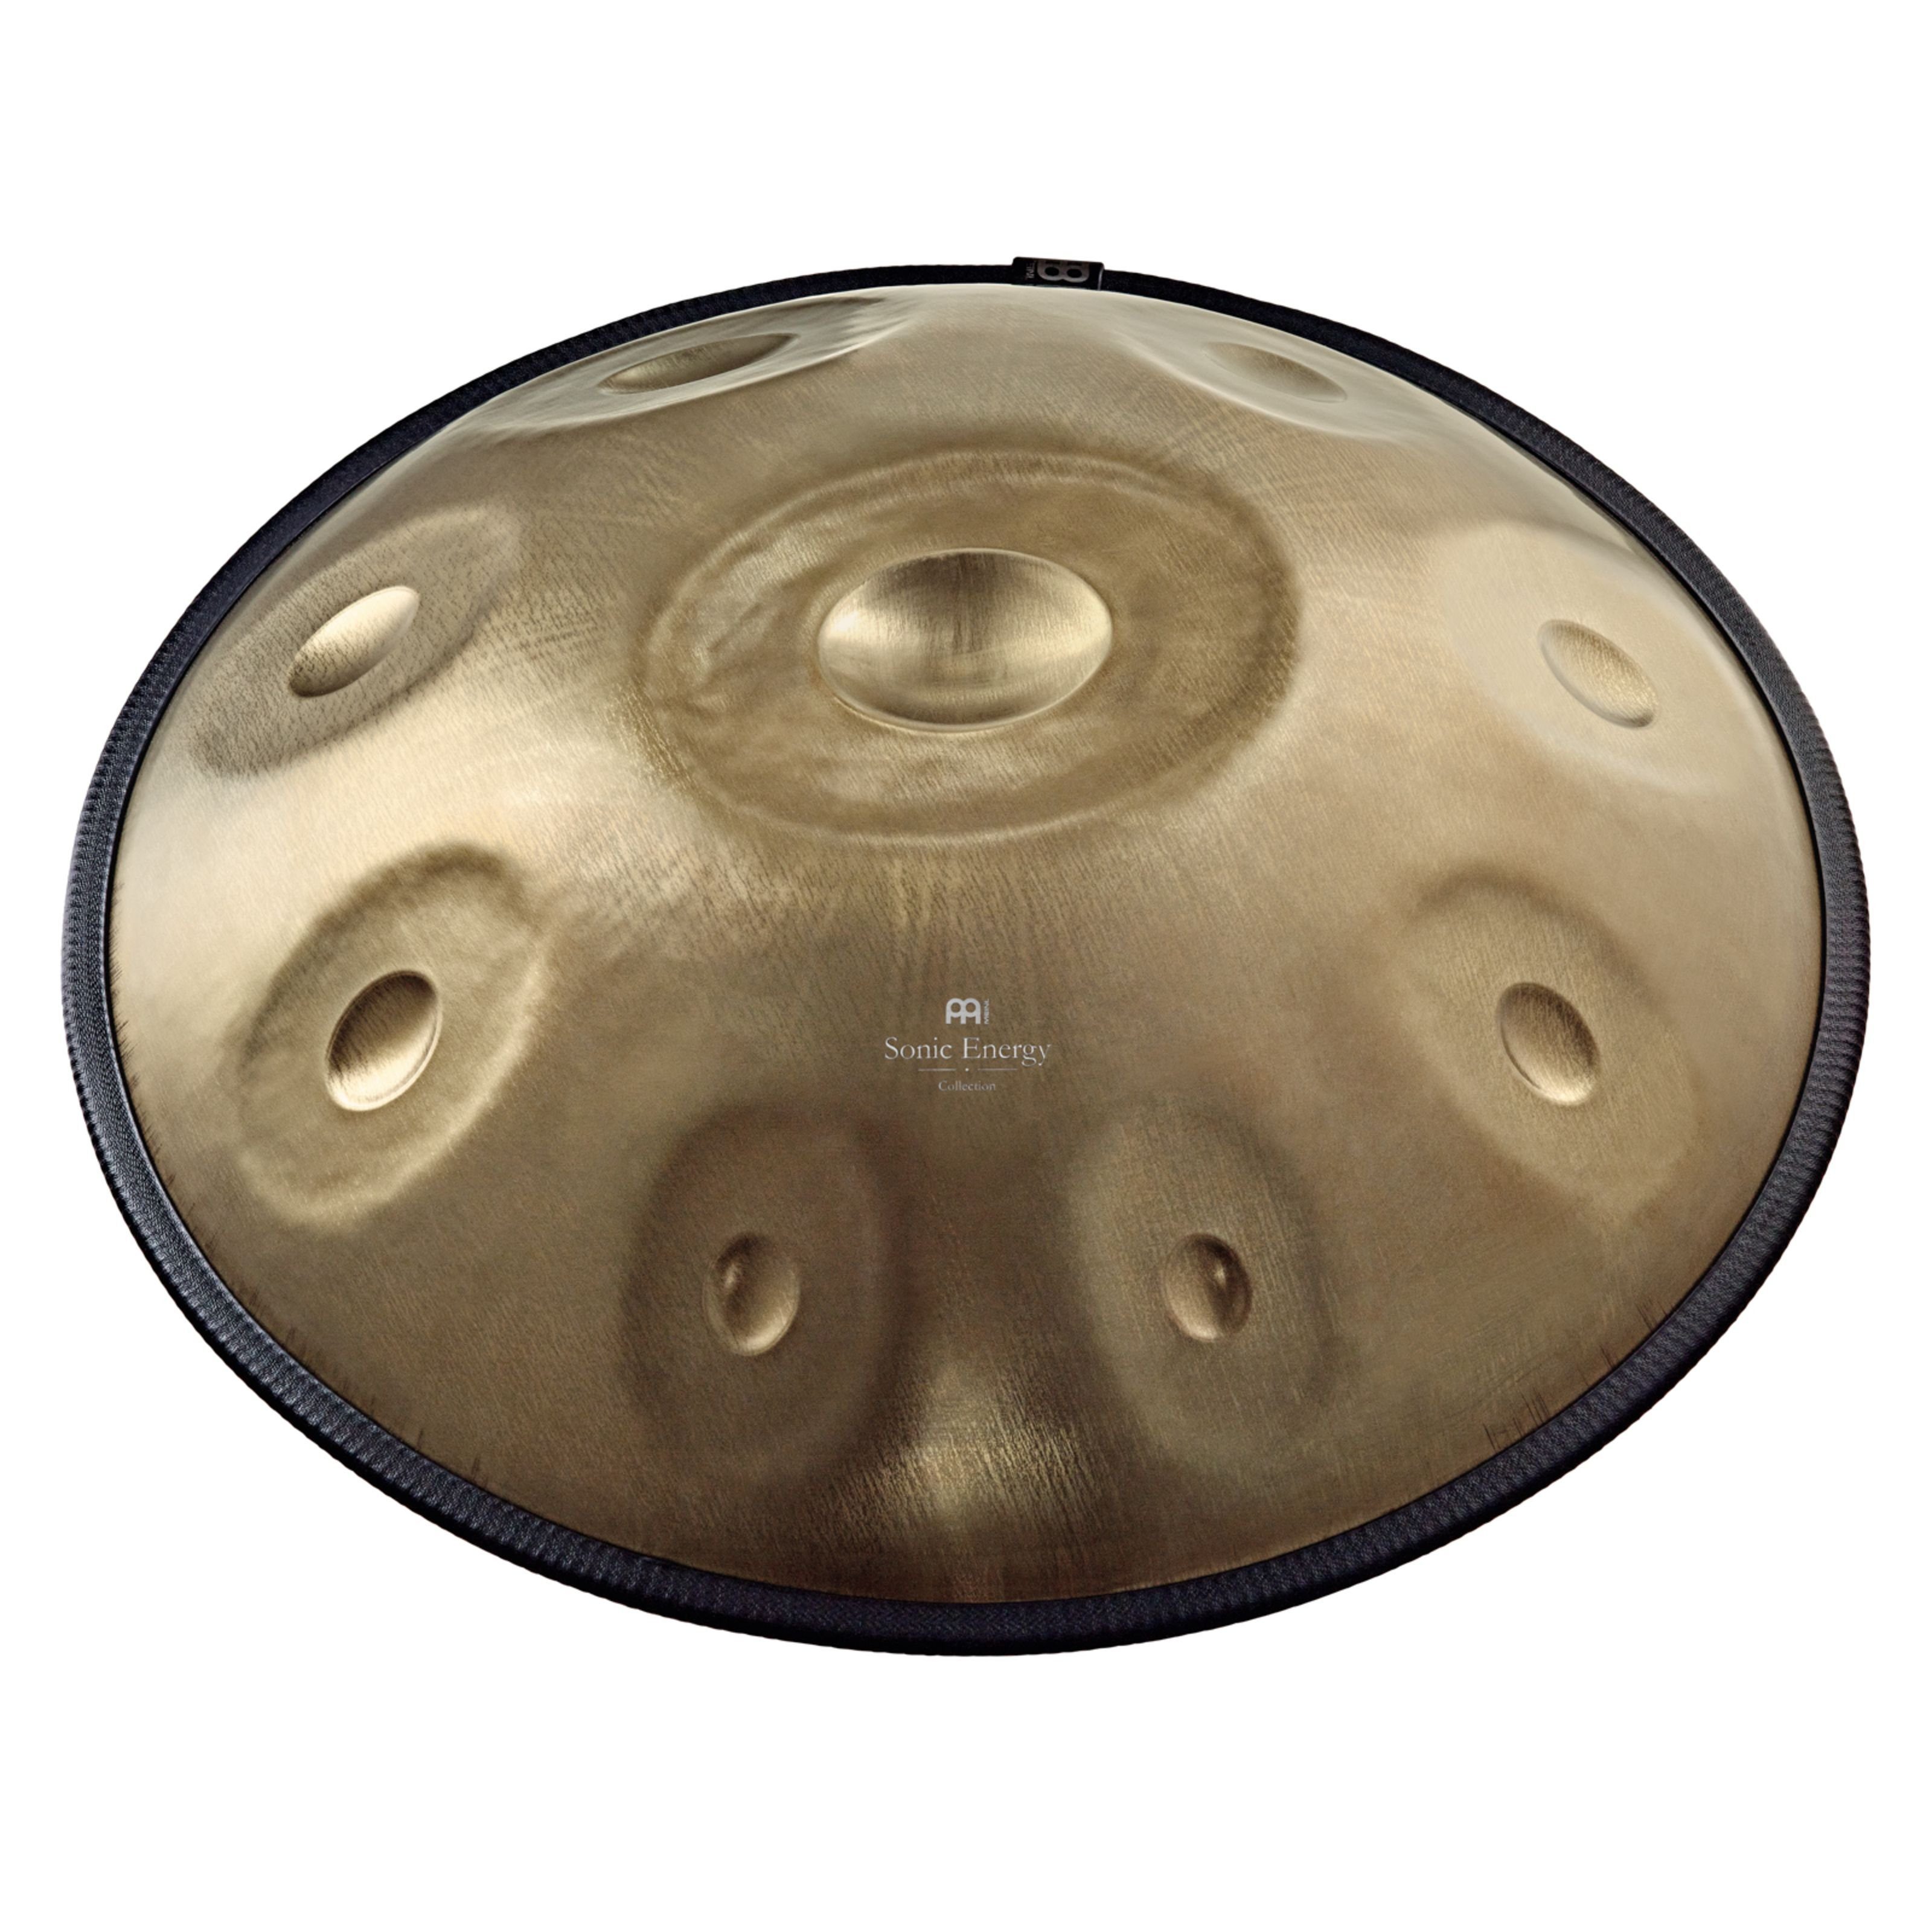 Meinl Percussion Spielzeug-Musikinstrument, HPSTL91 Sensory 9 Handpan Töne Amara D - Handpan